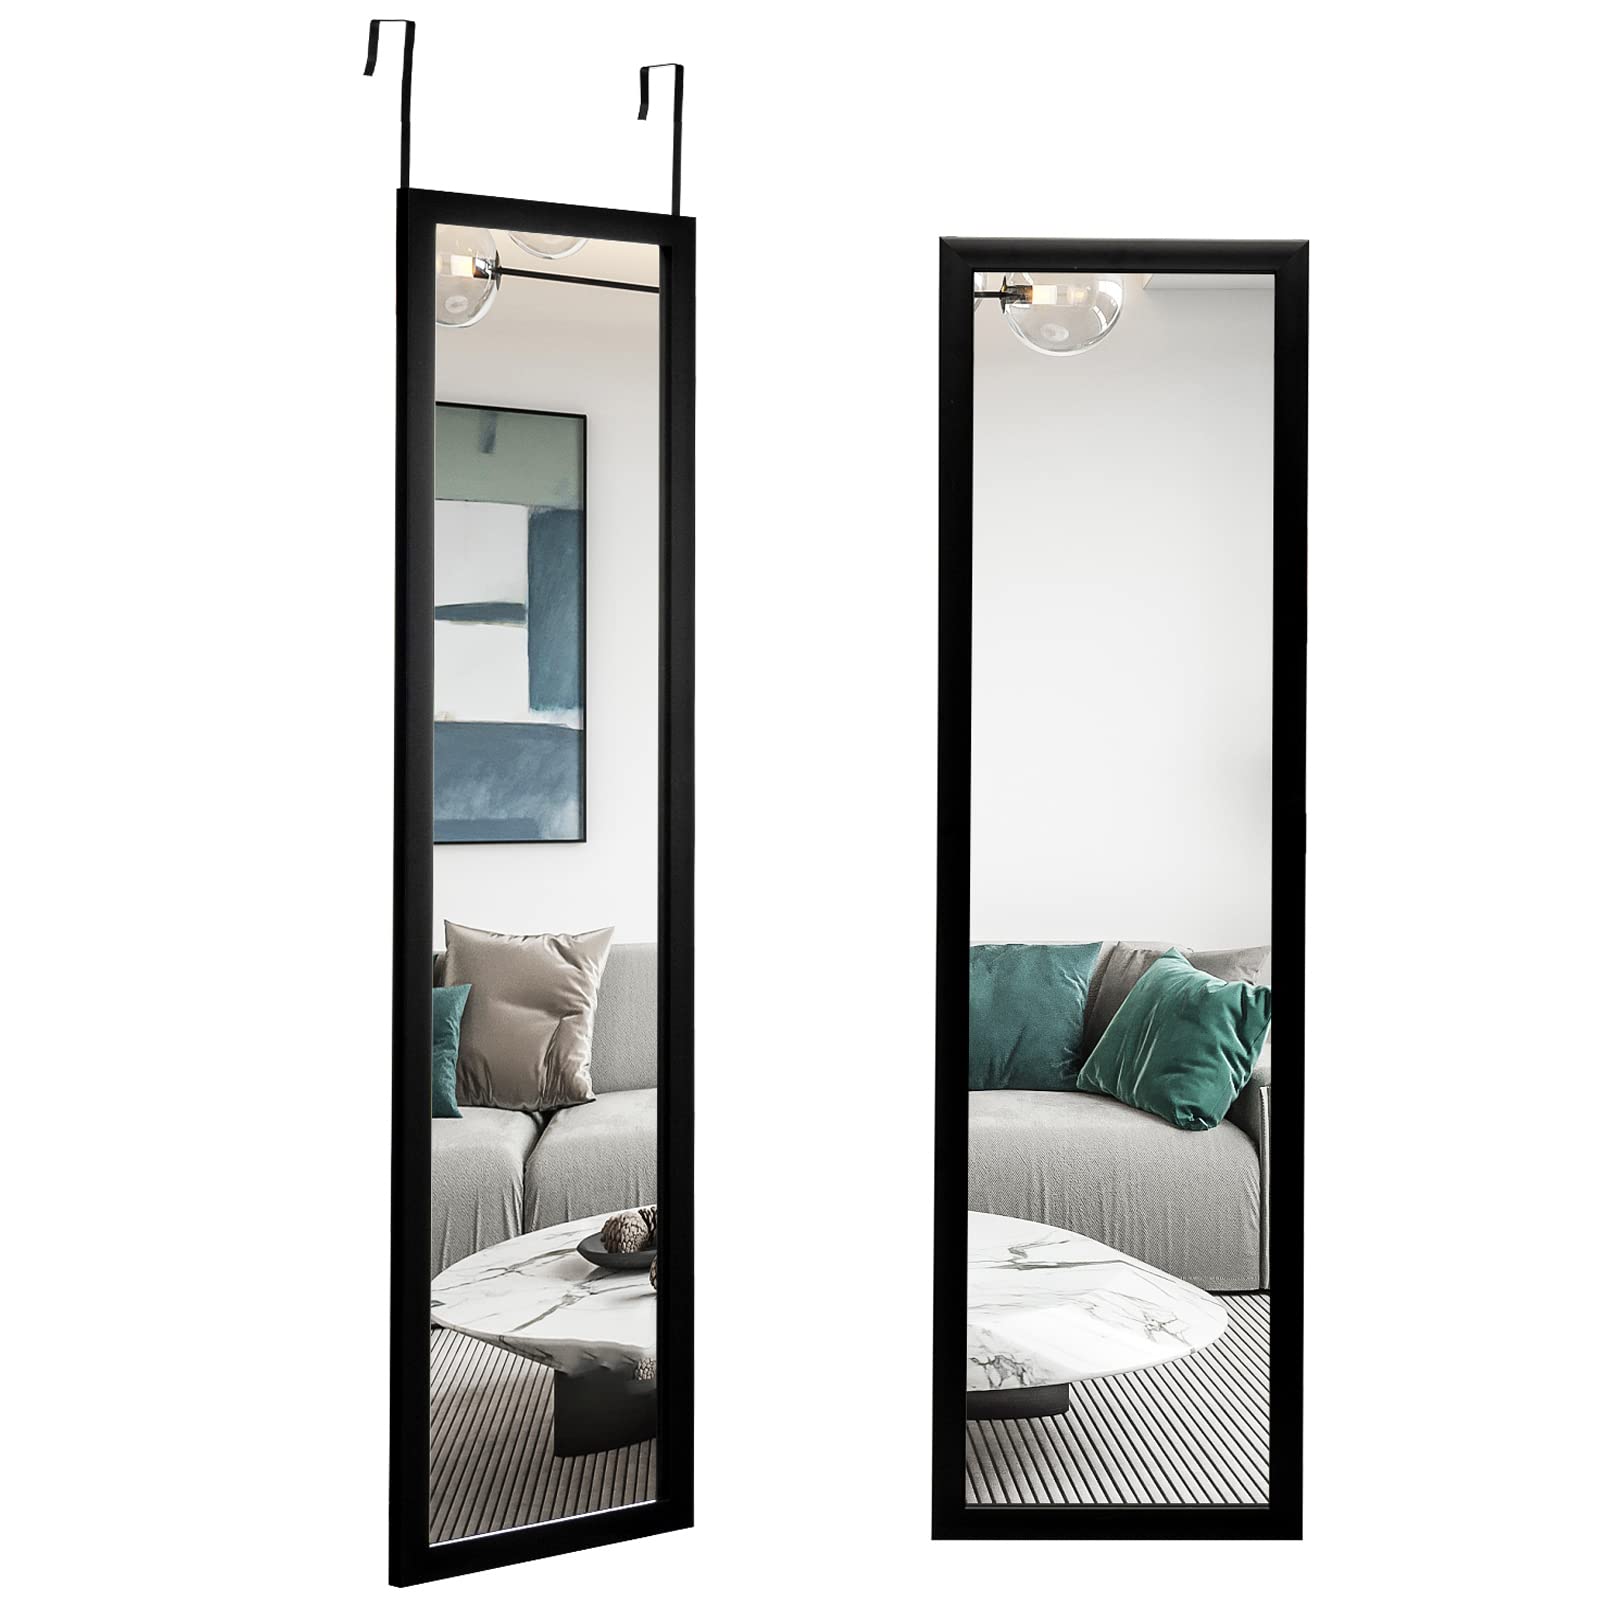 CHARMAID Over The Door Mirror, Wall Mounted Full Length Mirror, 2 Metal Hooks, 47" x 13"